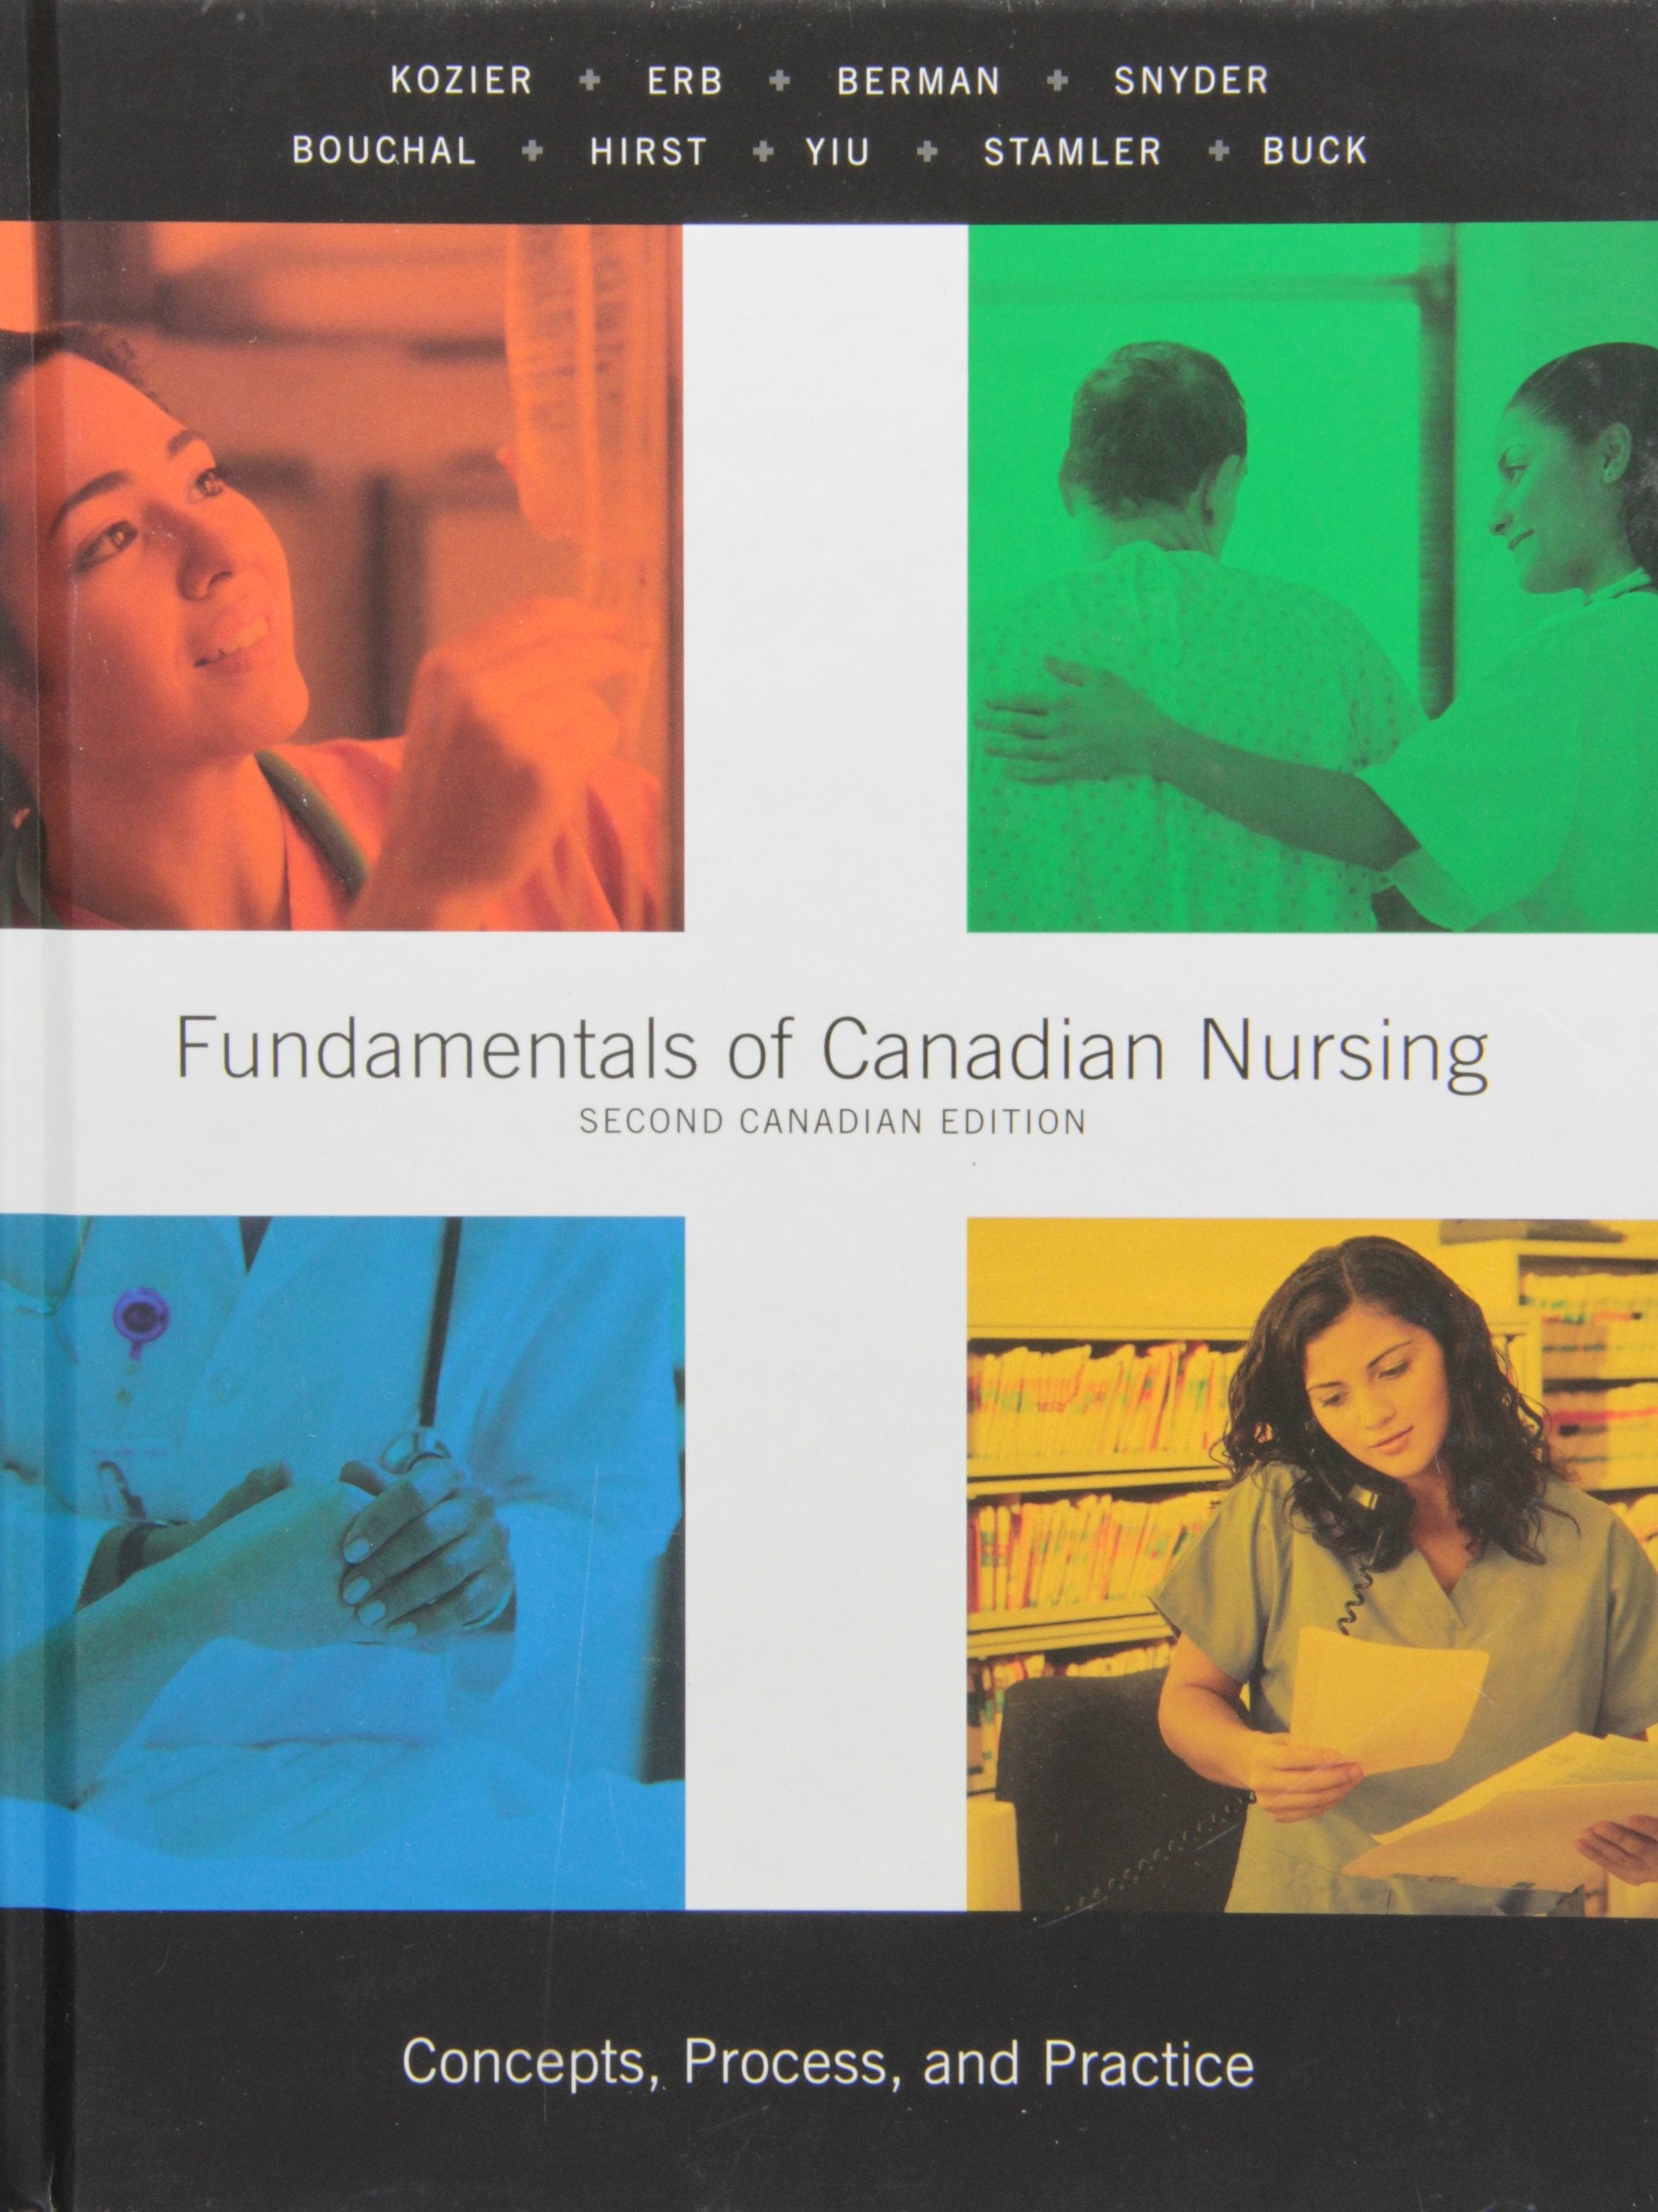 Livre ISBN 0136135374 Fundamentals of Canadian nursing : concepts, process and practice (Kozier)